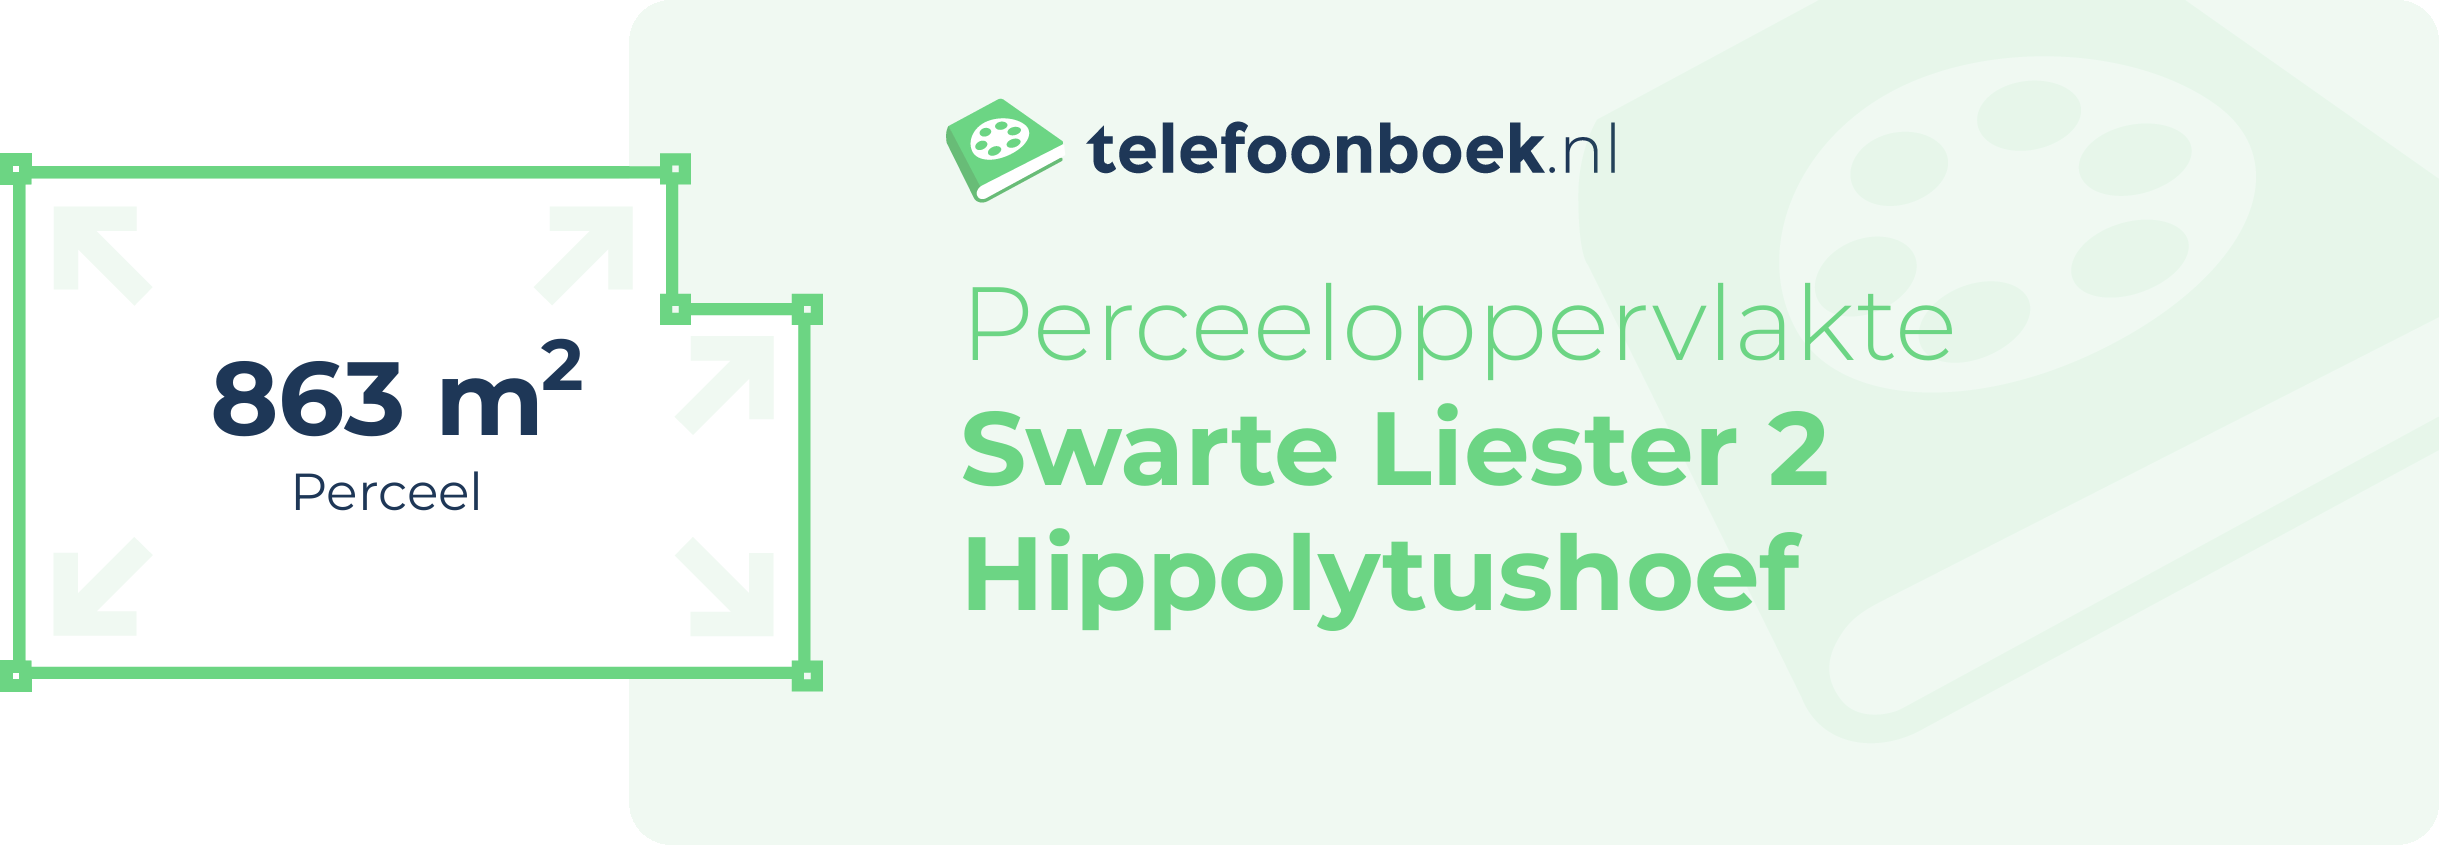 Perceeloppervlakte Swarte Liester 2 Hippolytushoef